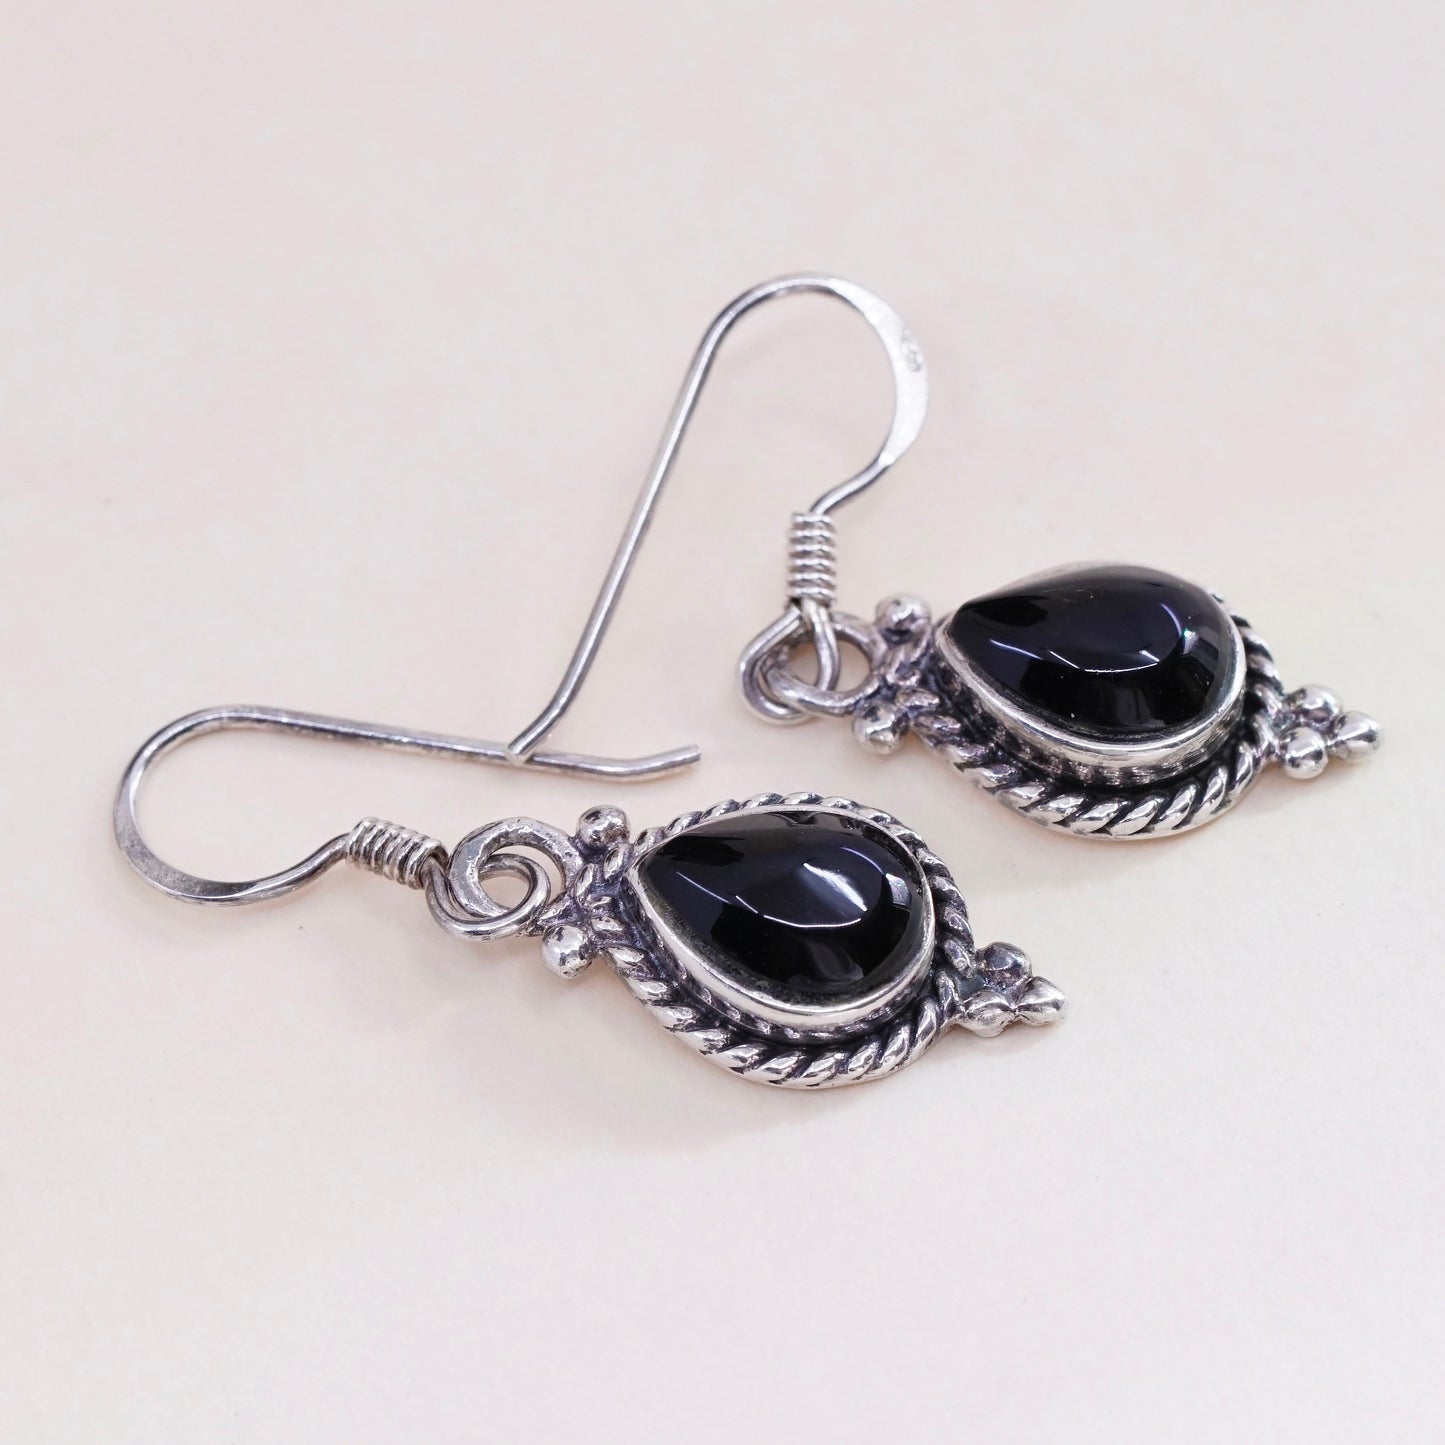 Vintage Sterling silver handmade earrings, 925 teardrop obsidian with cable